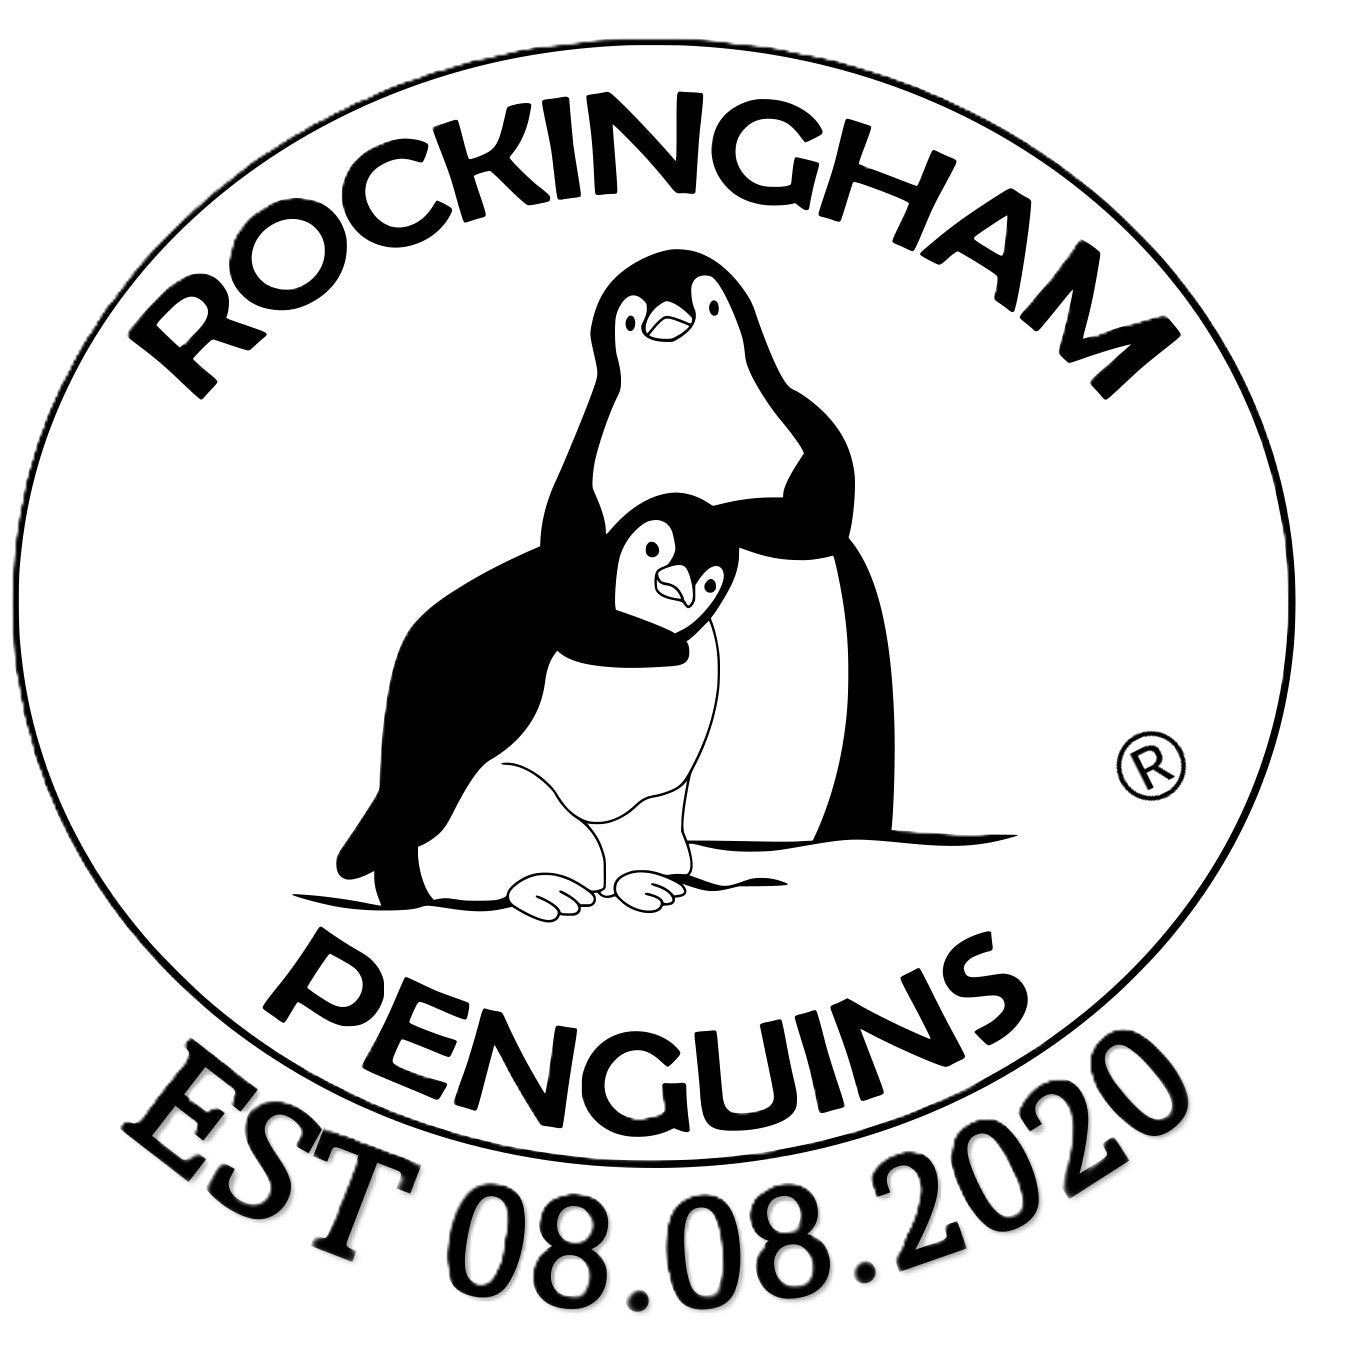 Rockingham Penguins